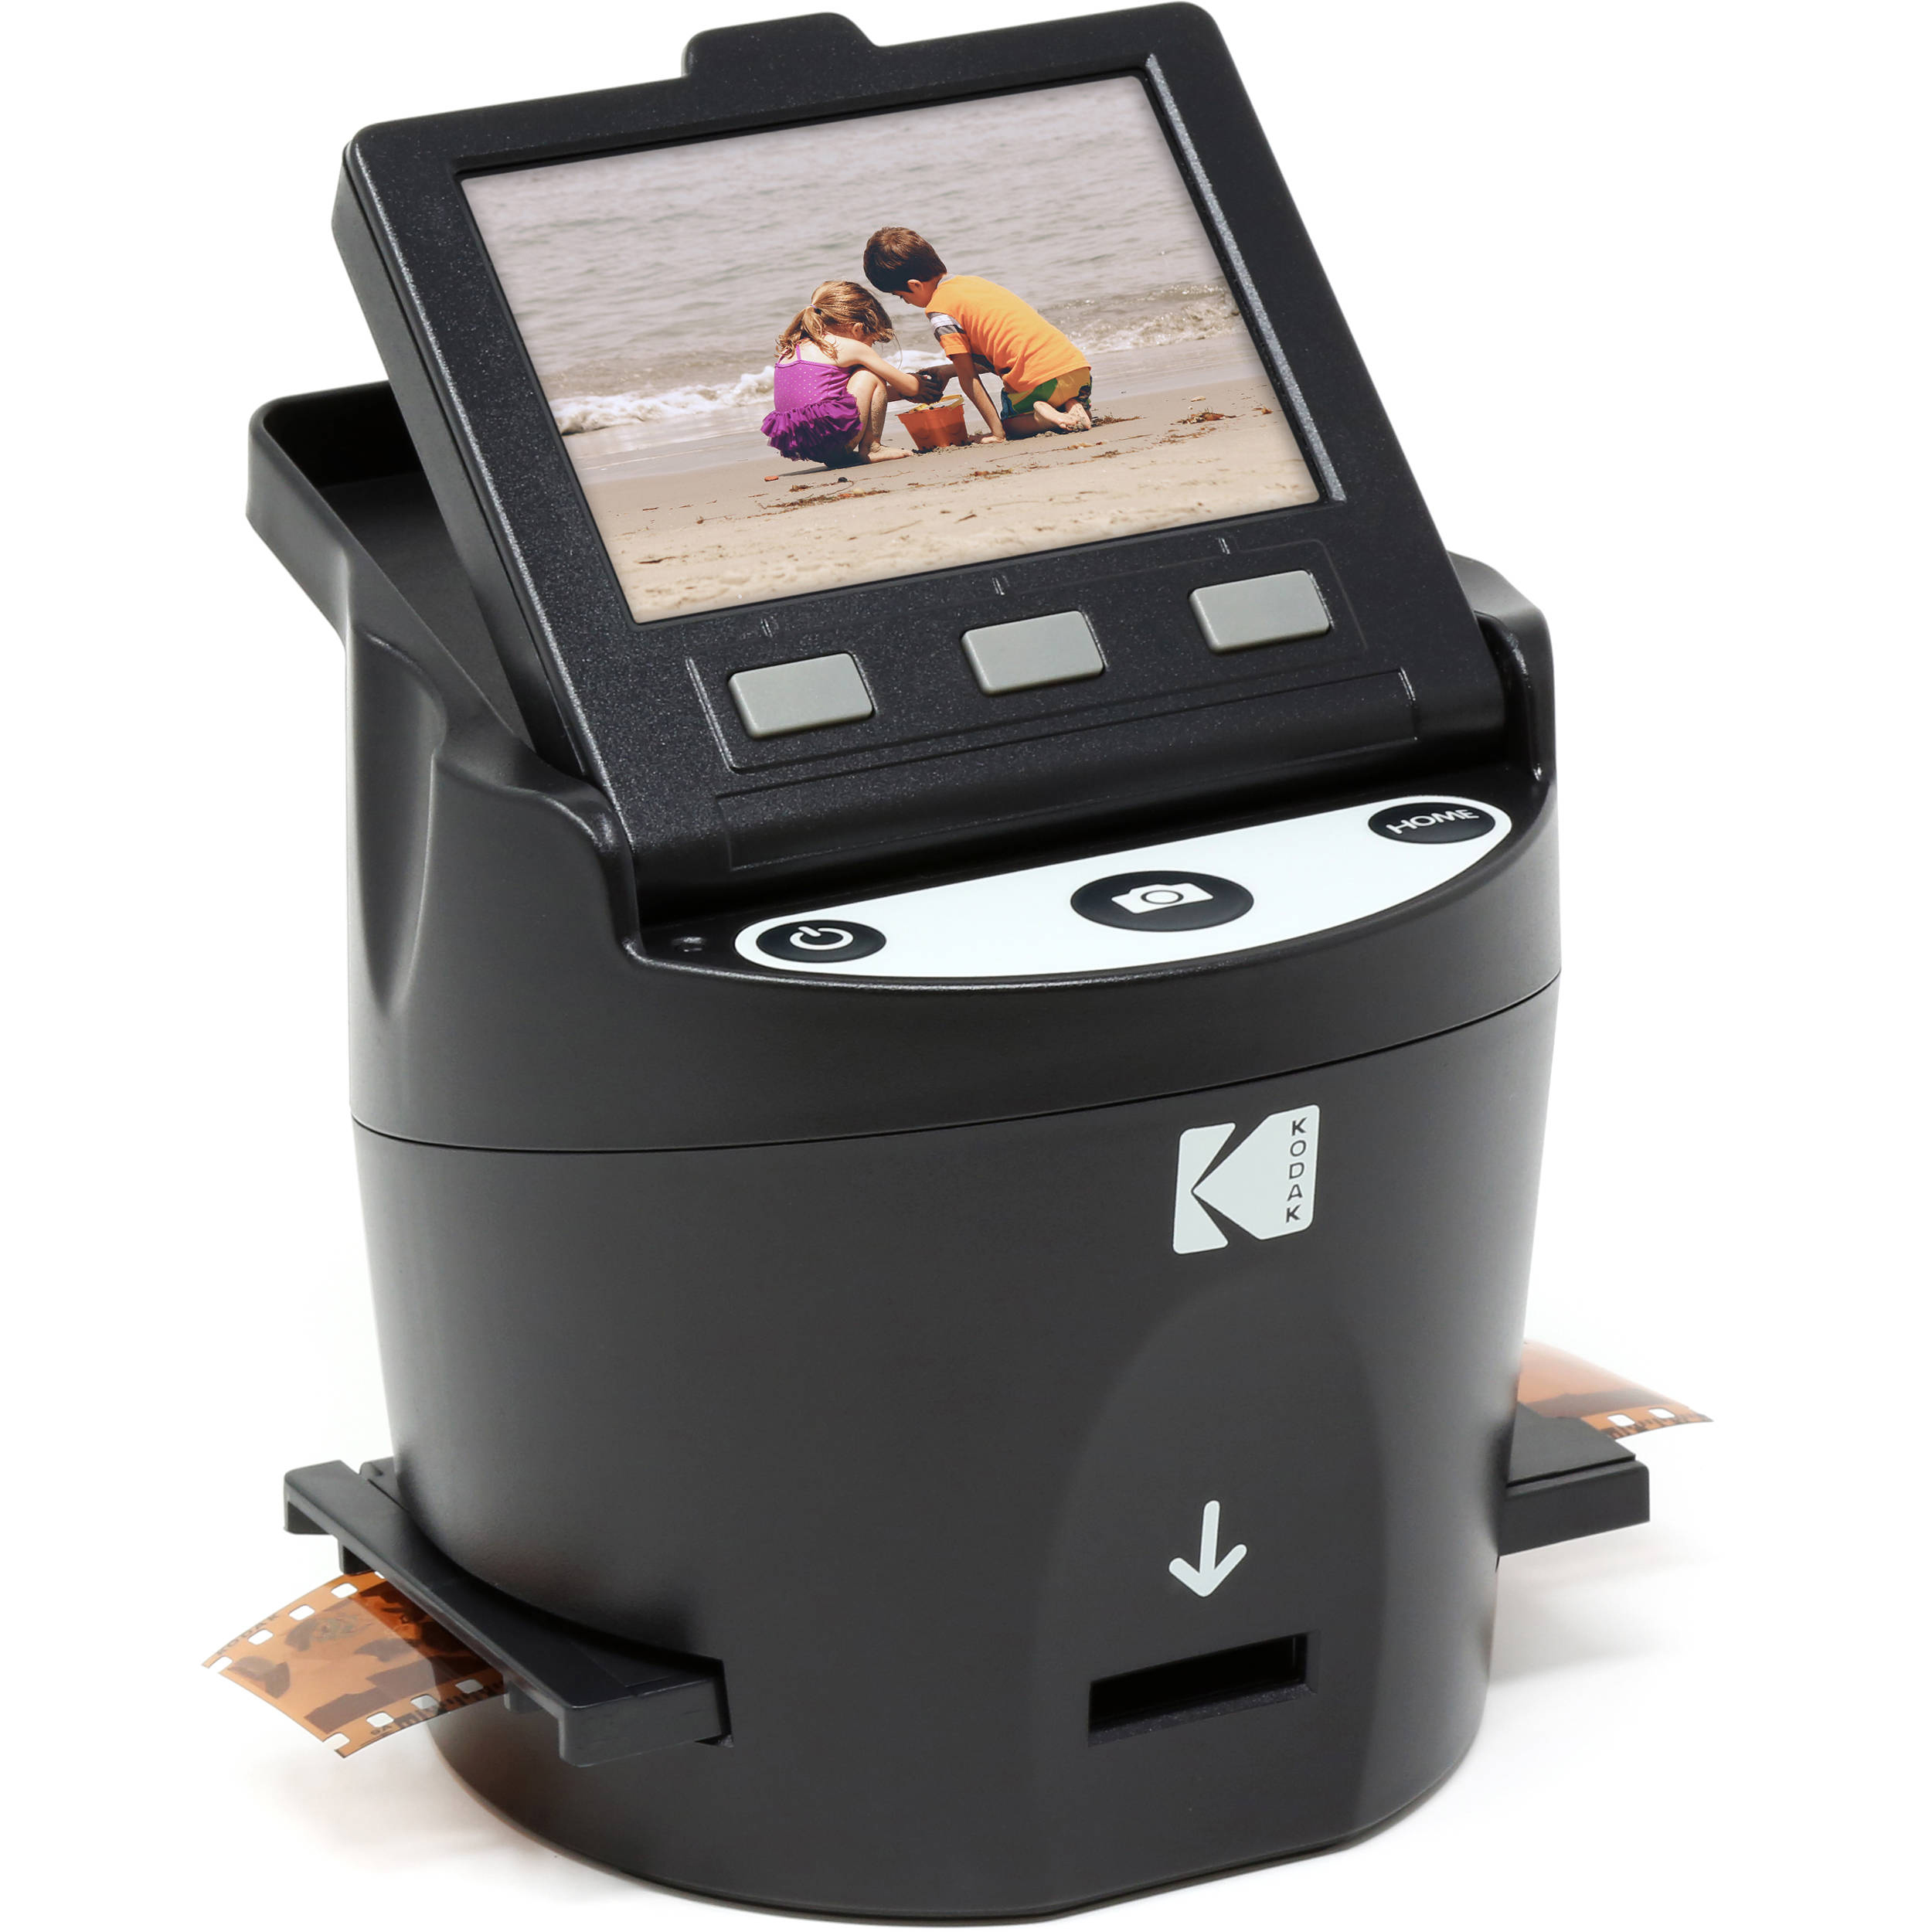 Kodak film scan tool for pc and mac software update download